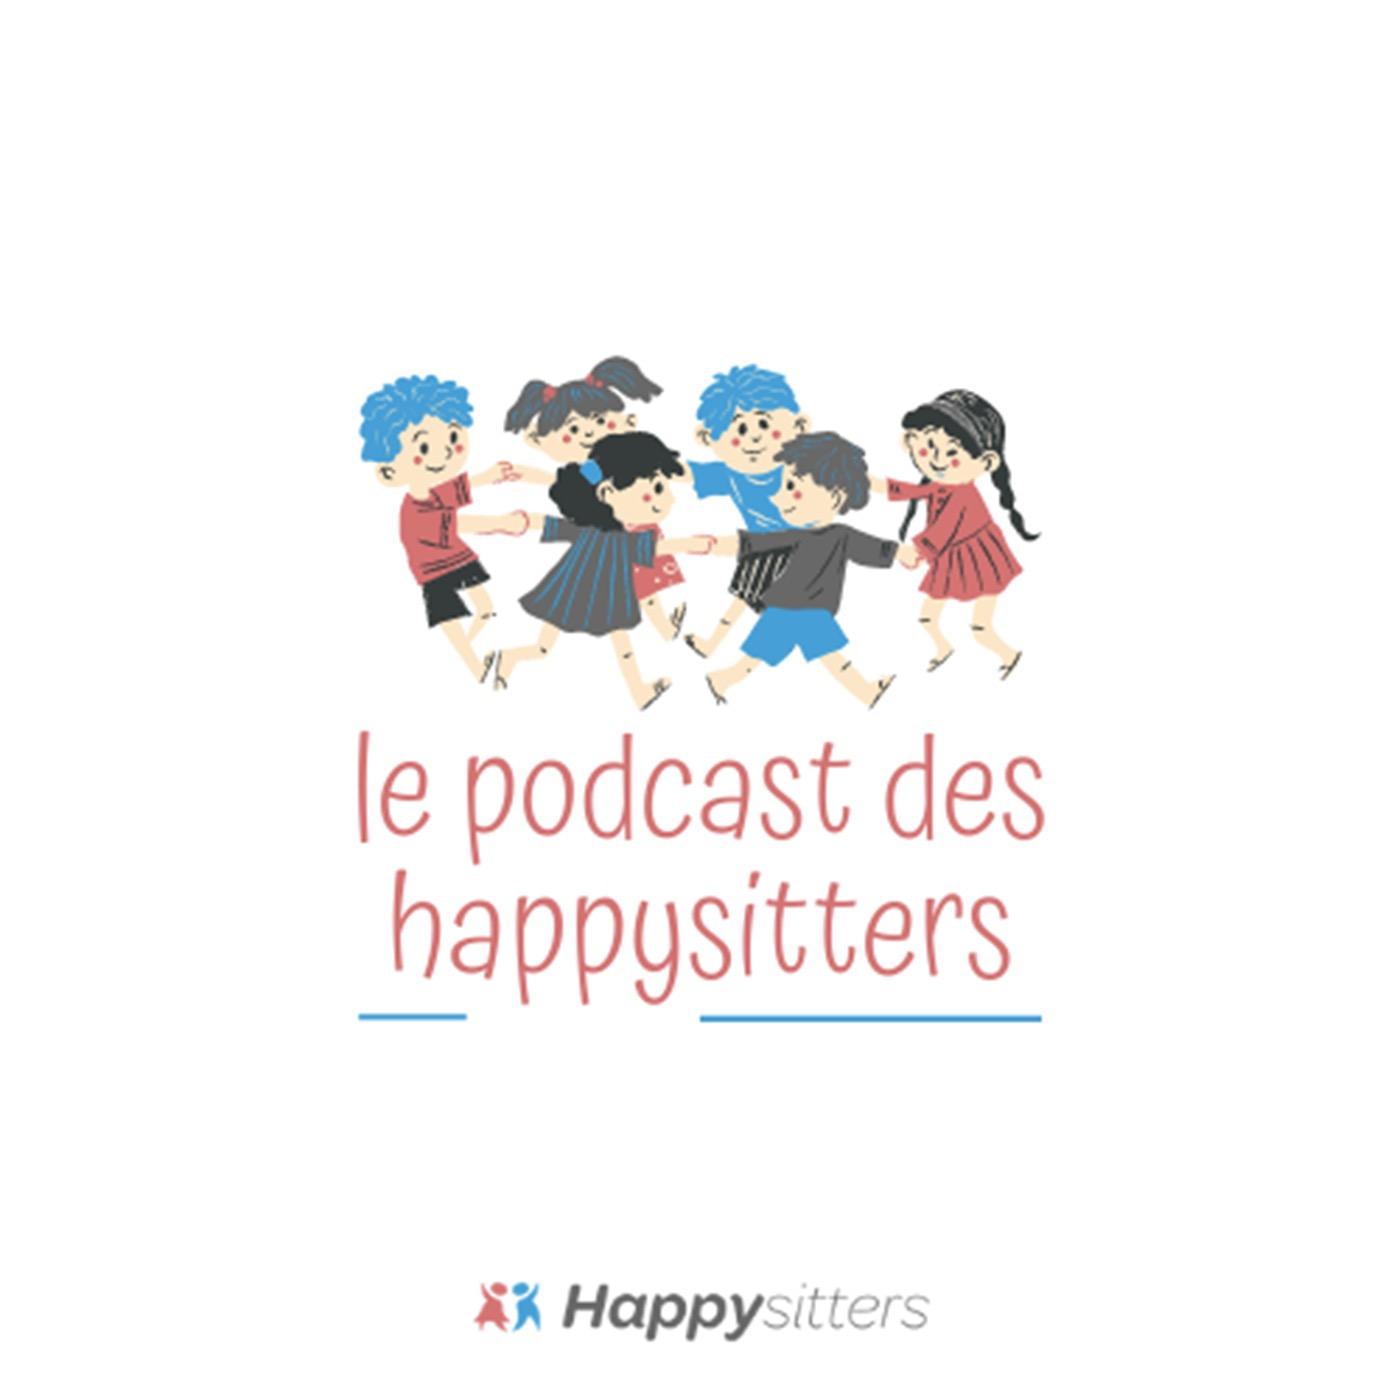 Le podcast des Happysitters